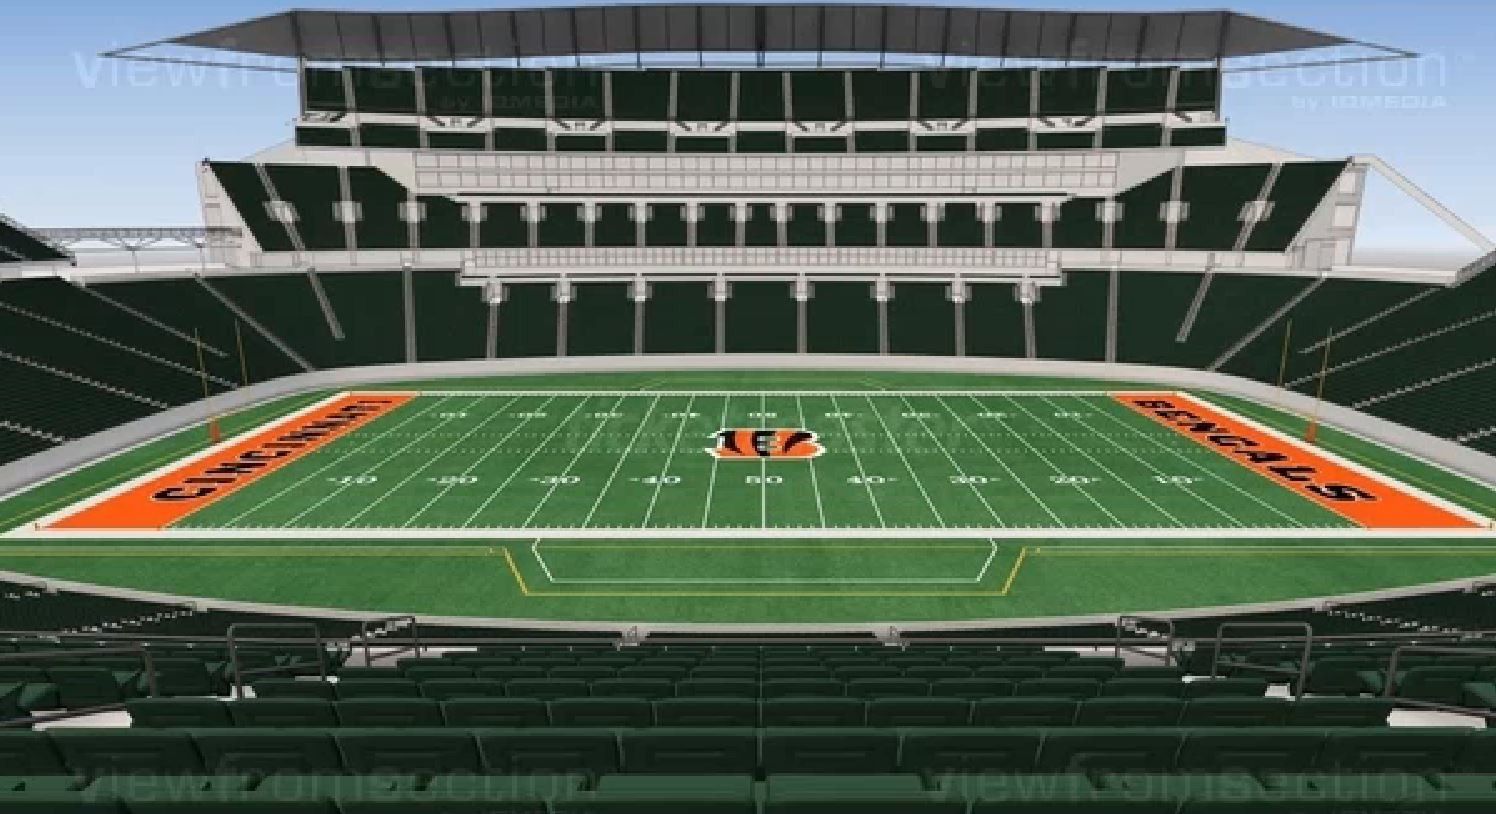 4 Field Side Tickets Section 210 - Cincinnati Bengals vs. Kansas City Chiefs
12/04